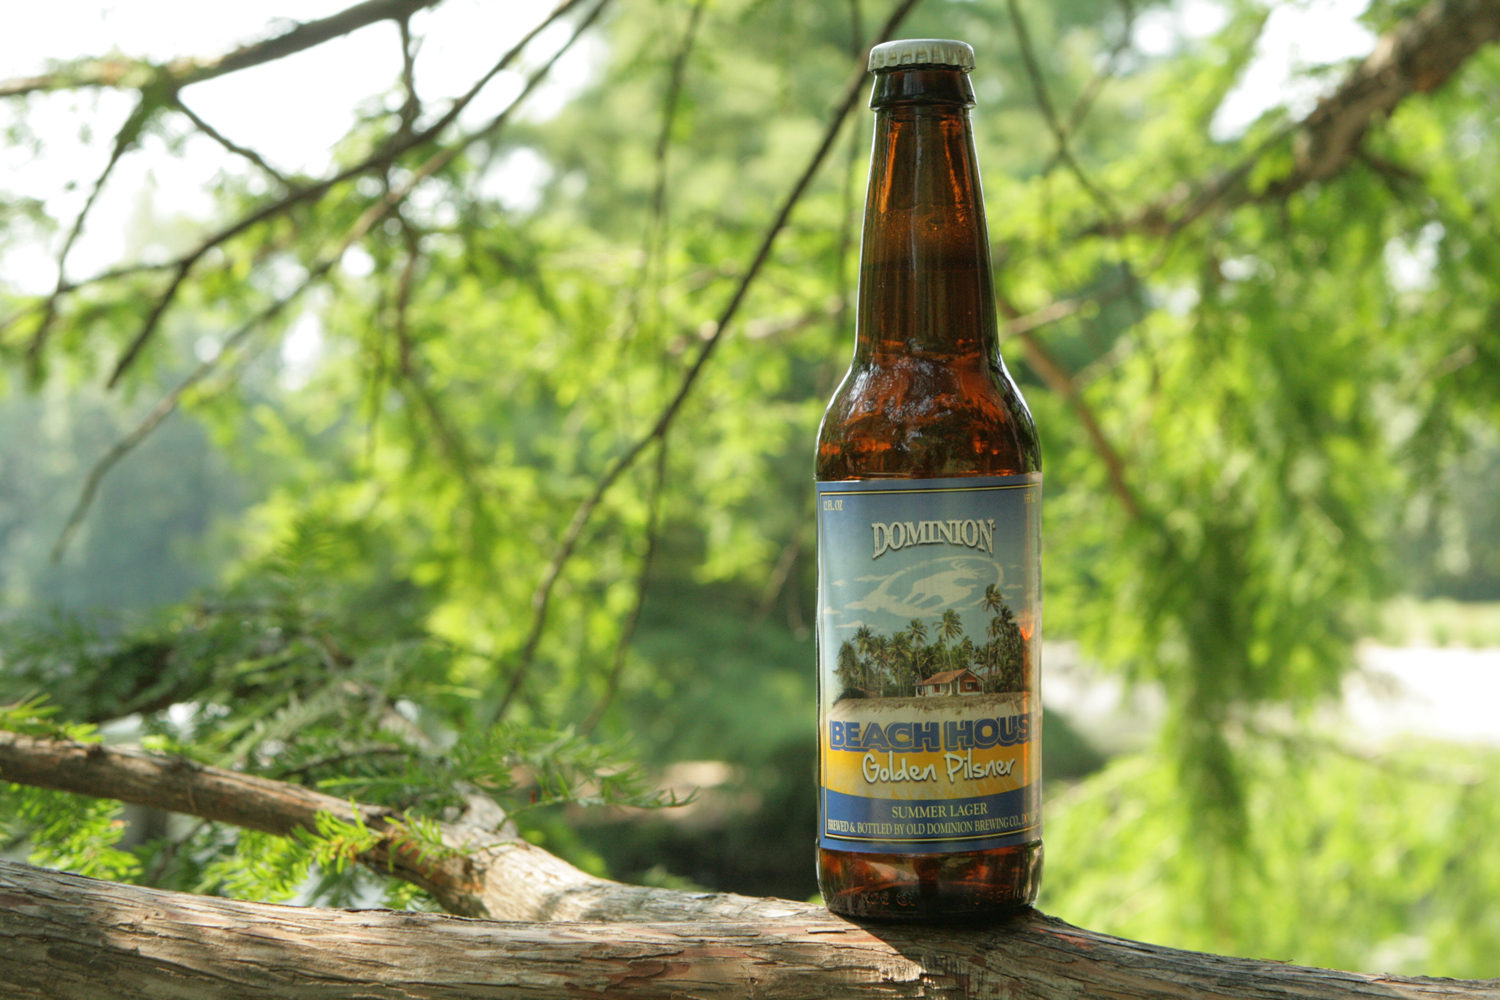 Enjoy a seasonal summer Beach House beer.